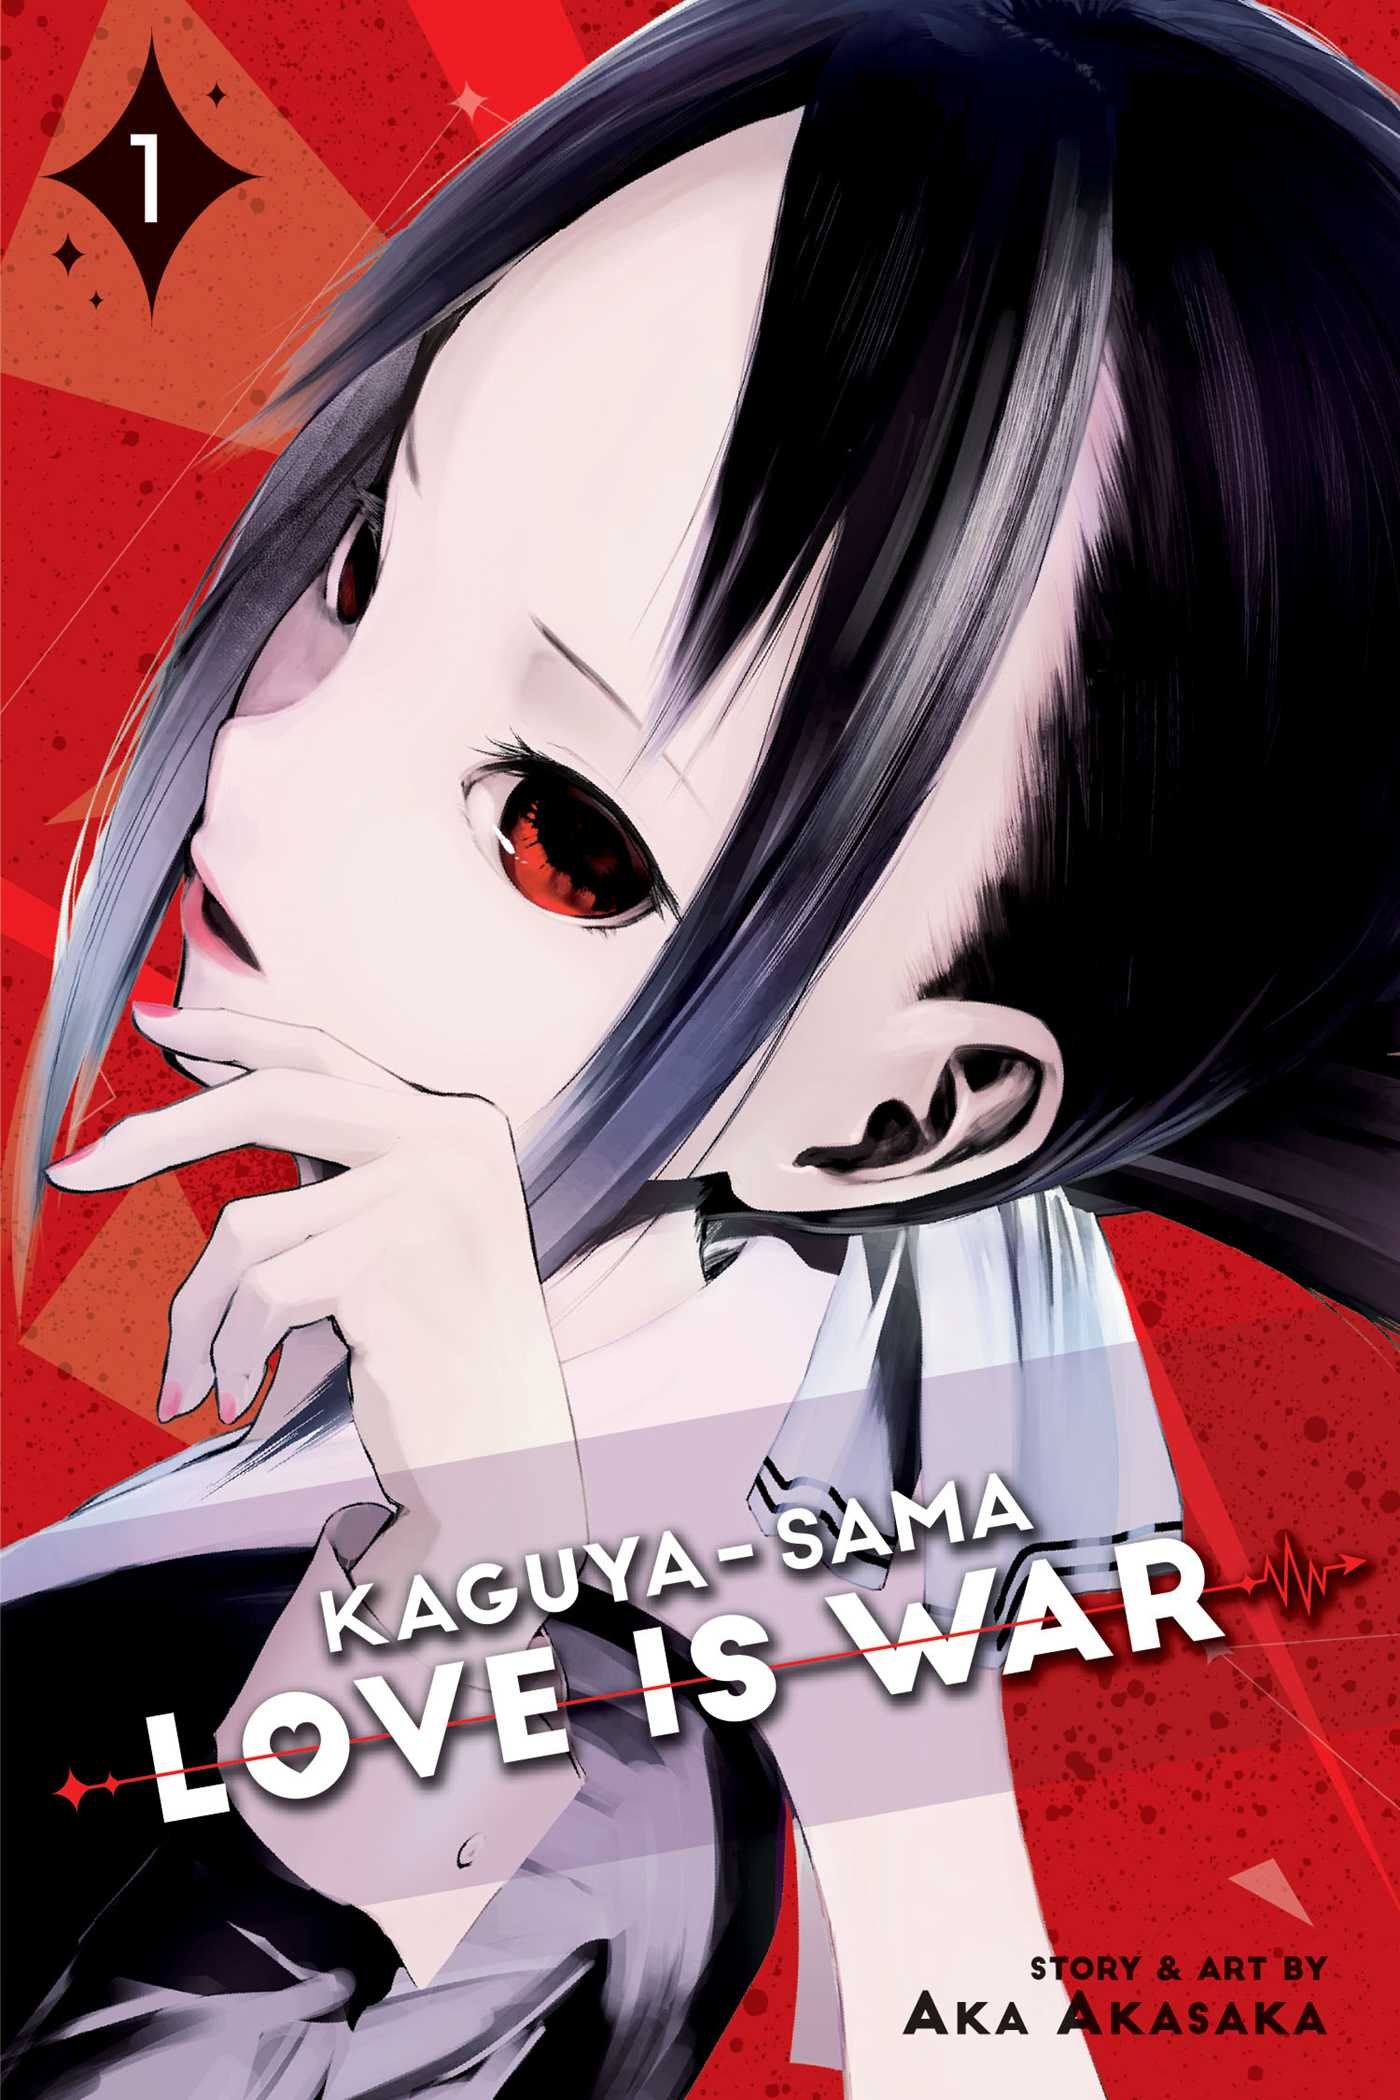 Kaguya Sama Love Is War Manga Plays An Unusual Game Of Romance